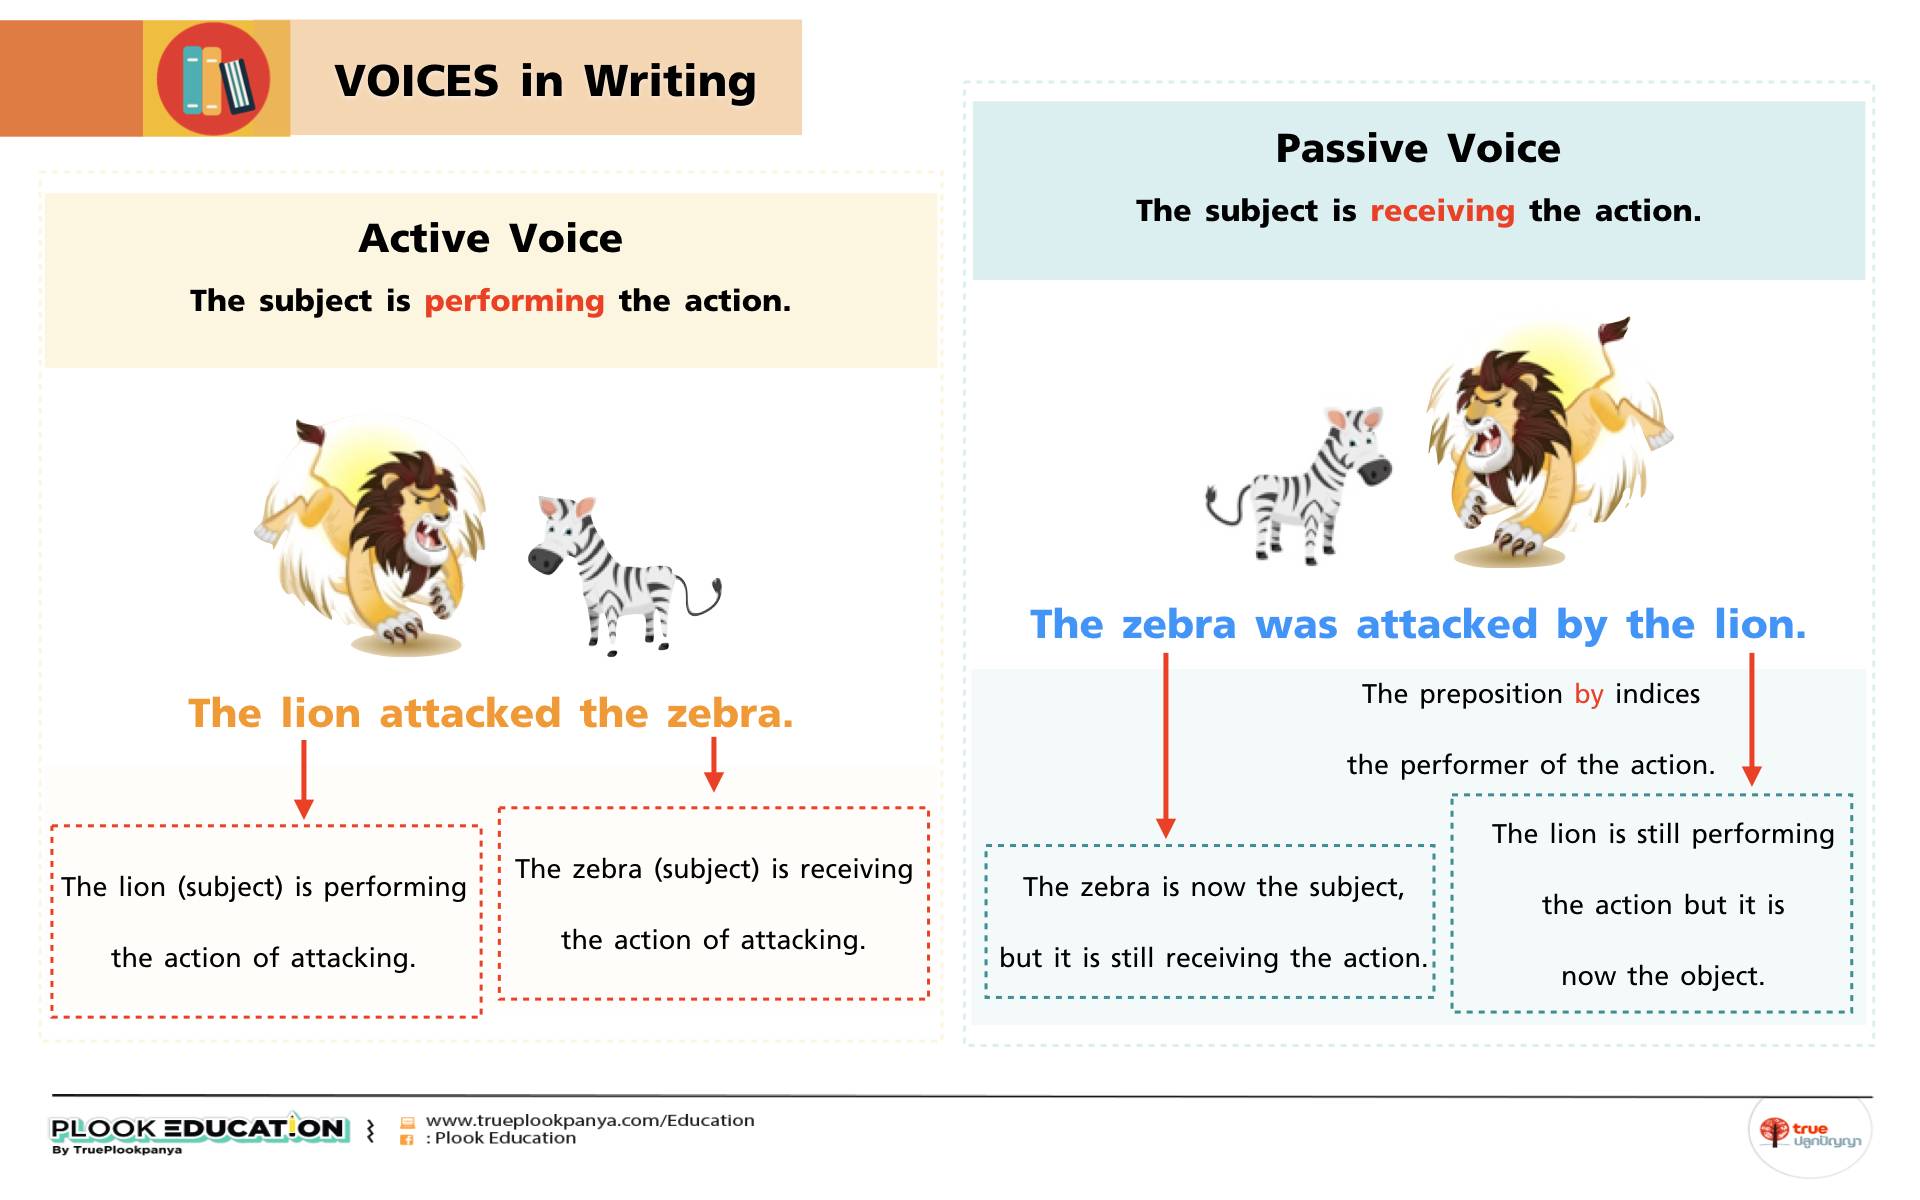 passive voice ใช้ 2